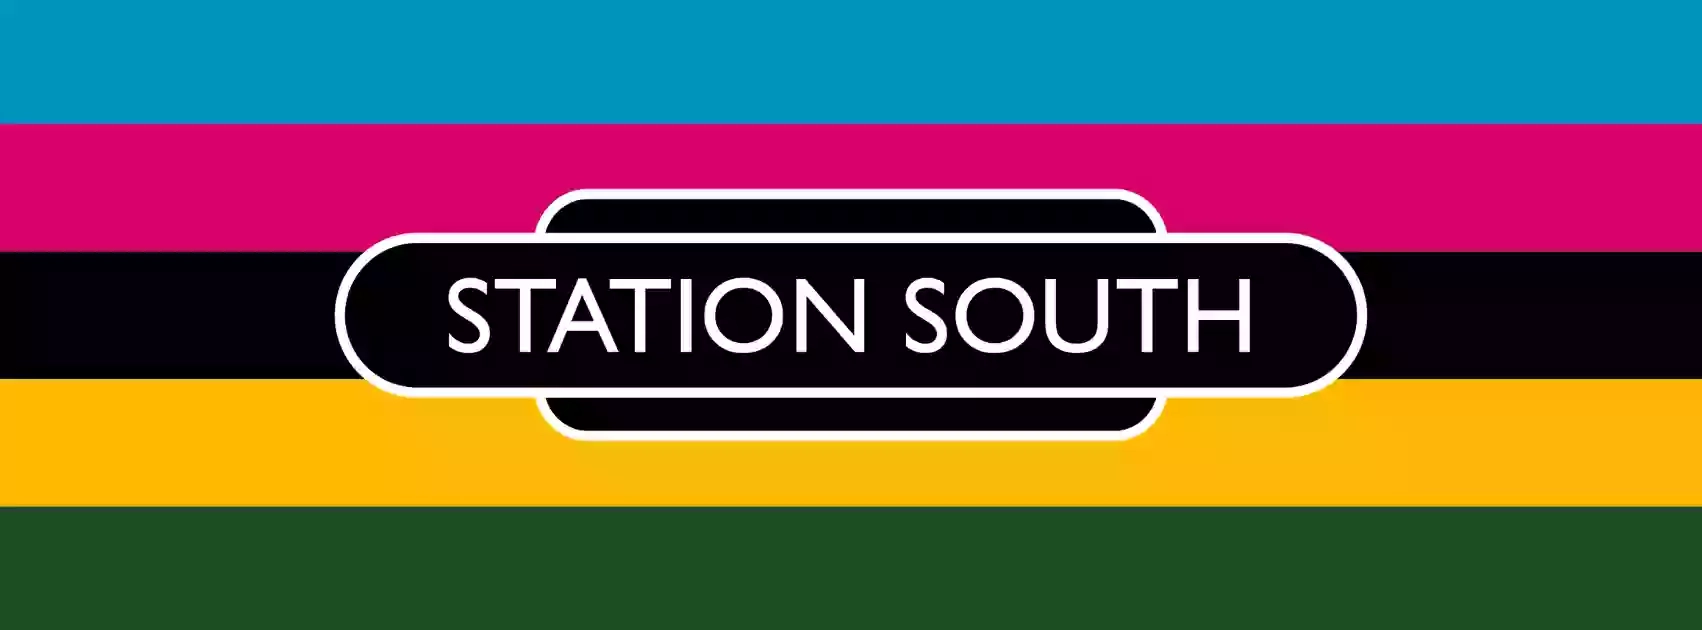 Station South